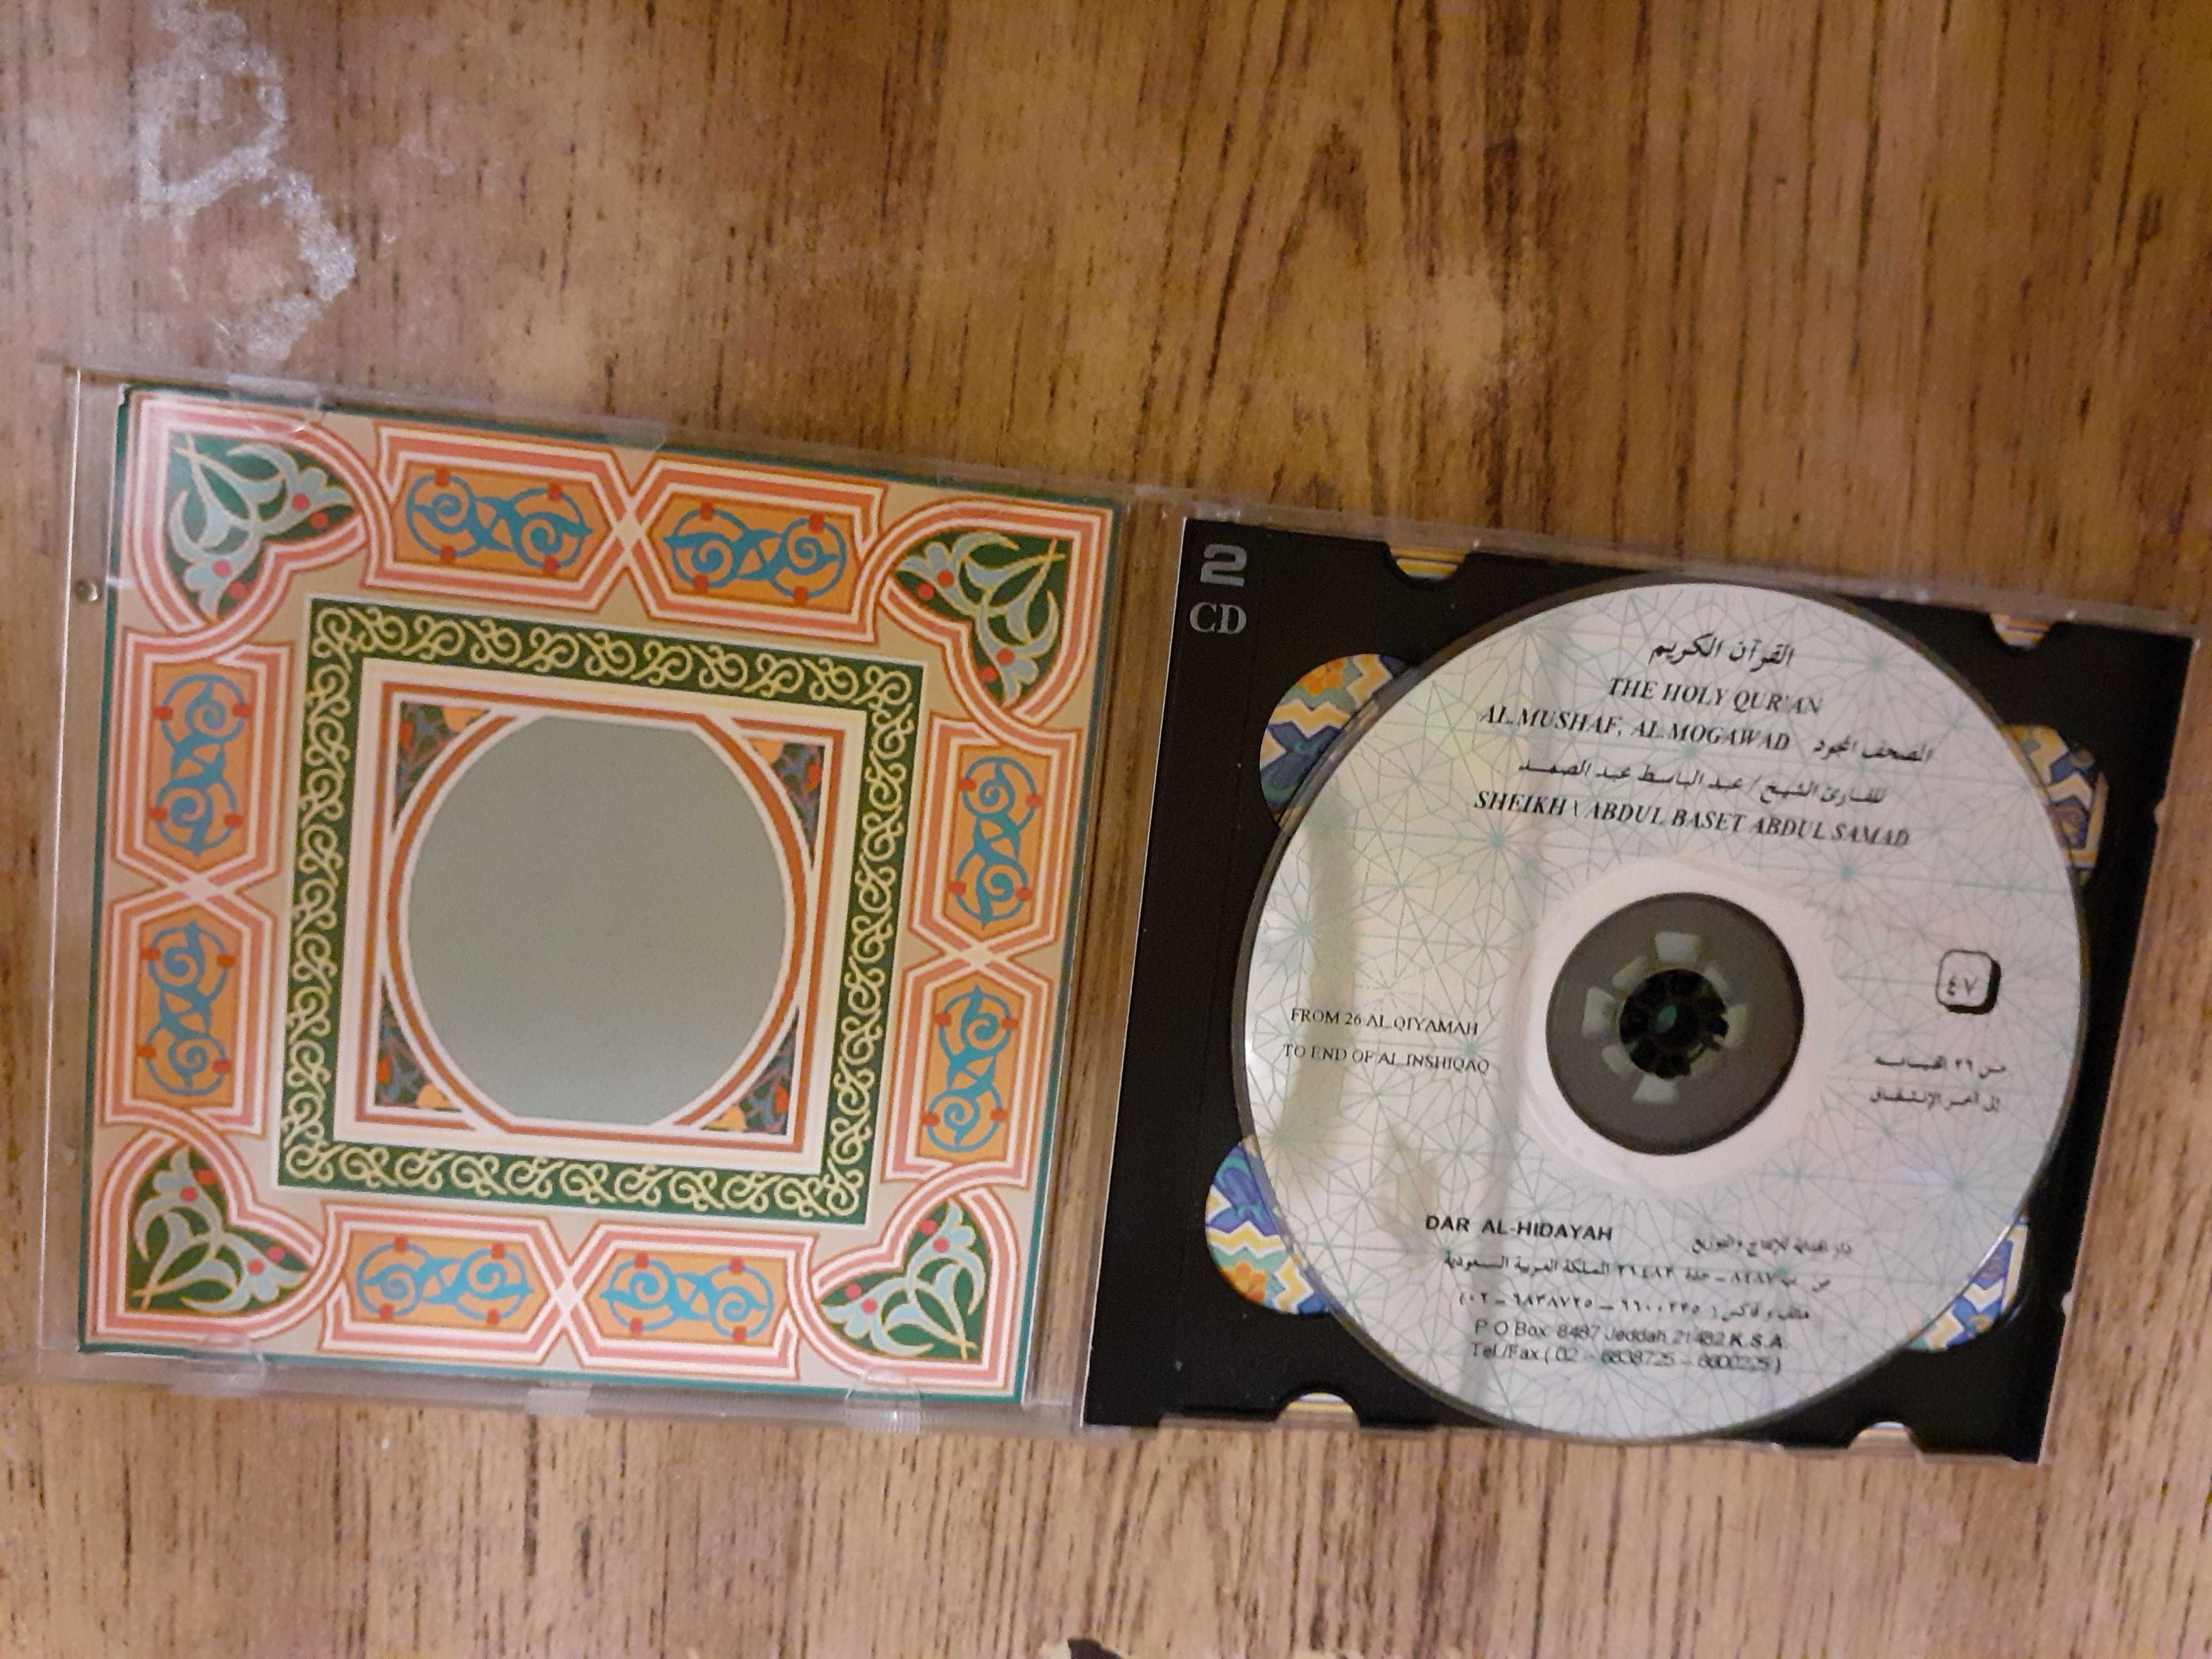 CD – The Holy Quran Sheihh/Abdul Baset Abdul Samad – álbum duplo